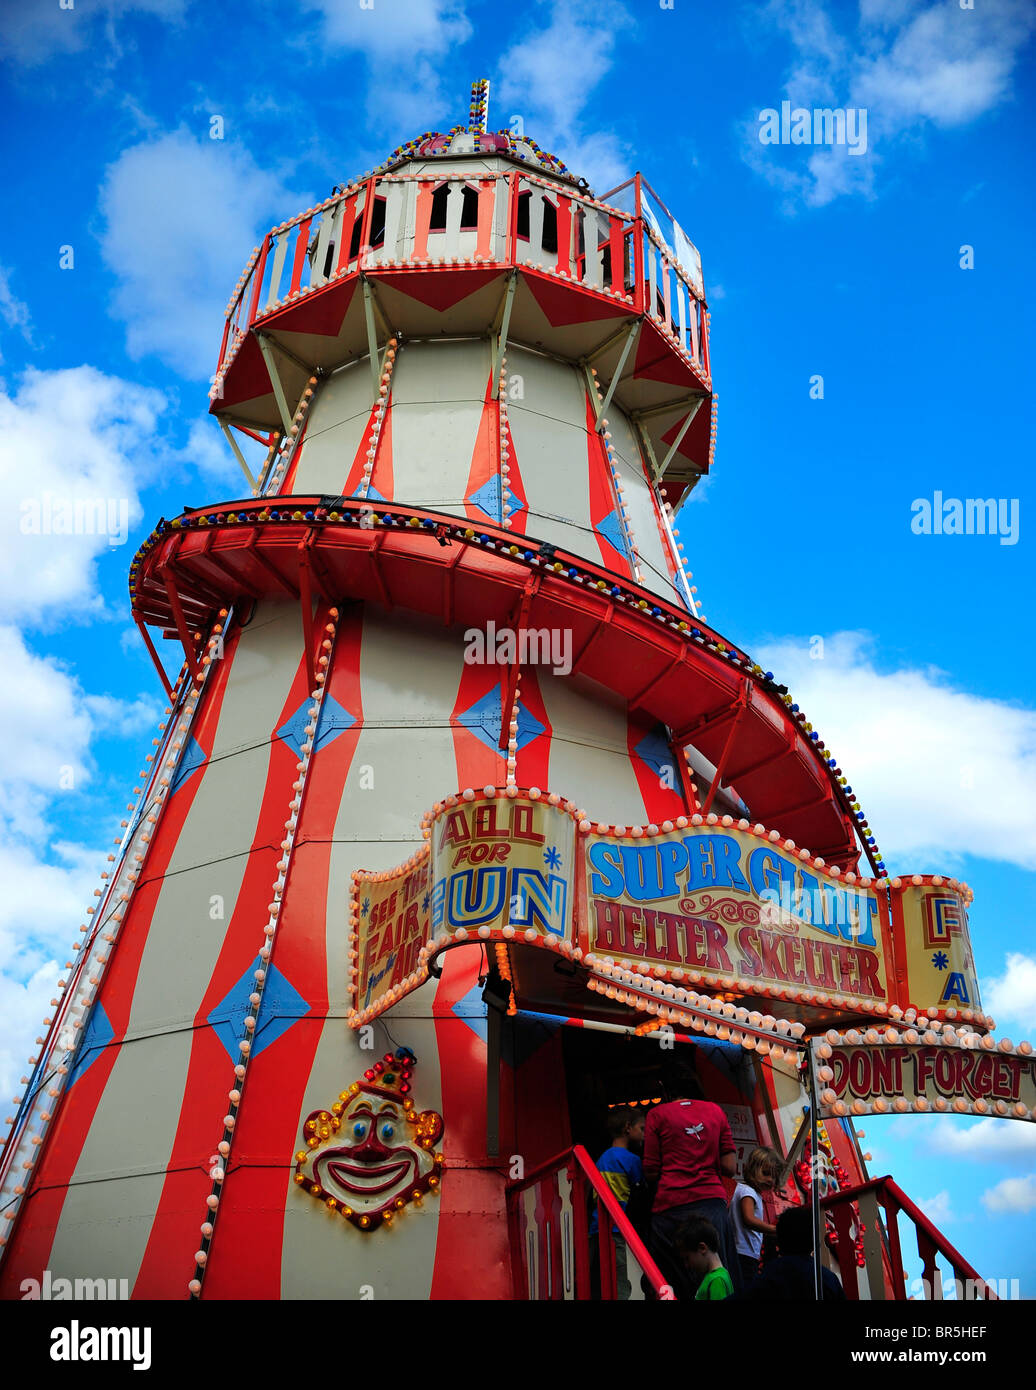 Helter Skelter slide ride at the Thames Festival, London Stock Photo - Alamy